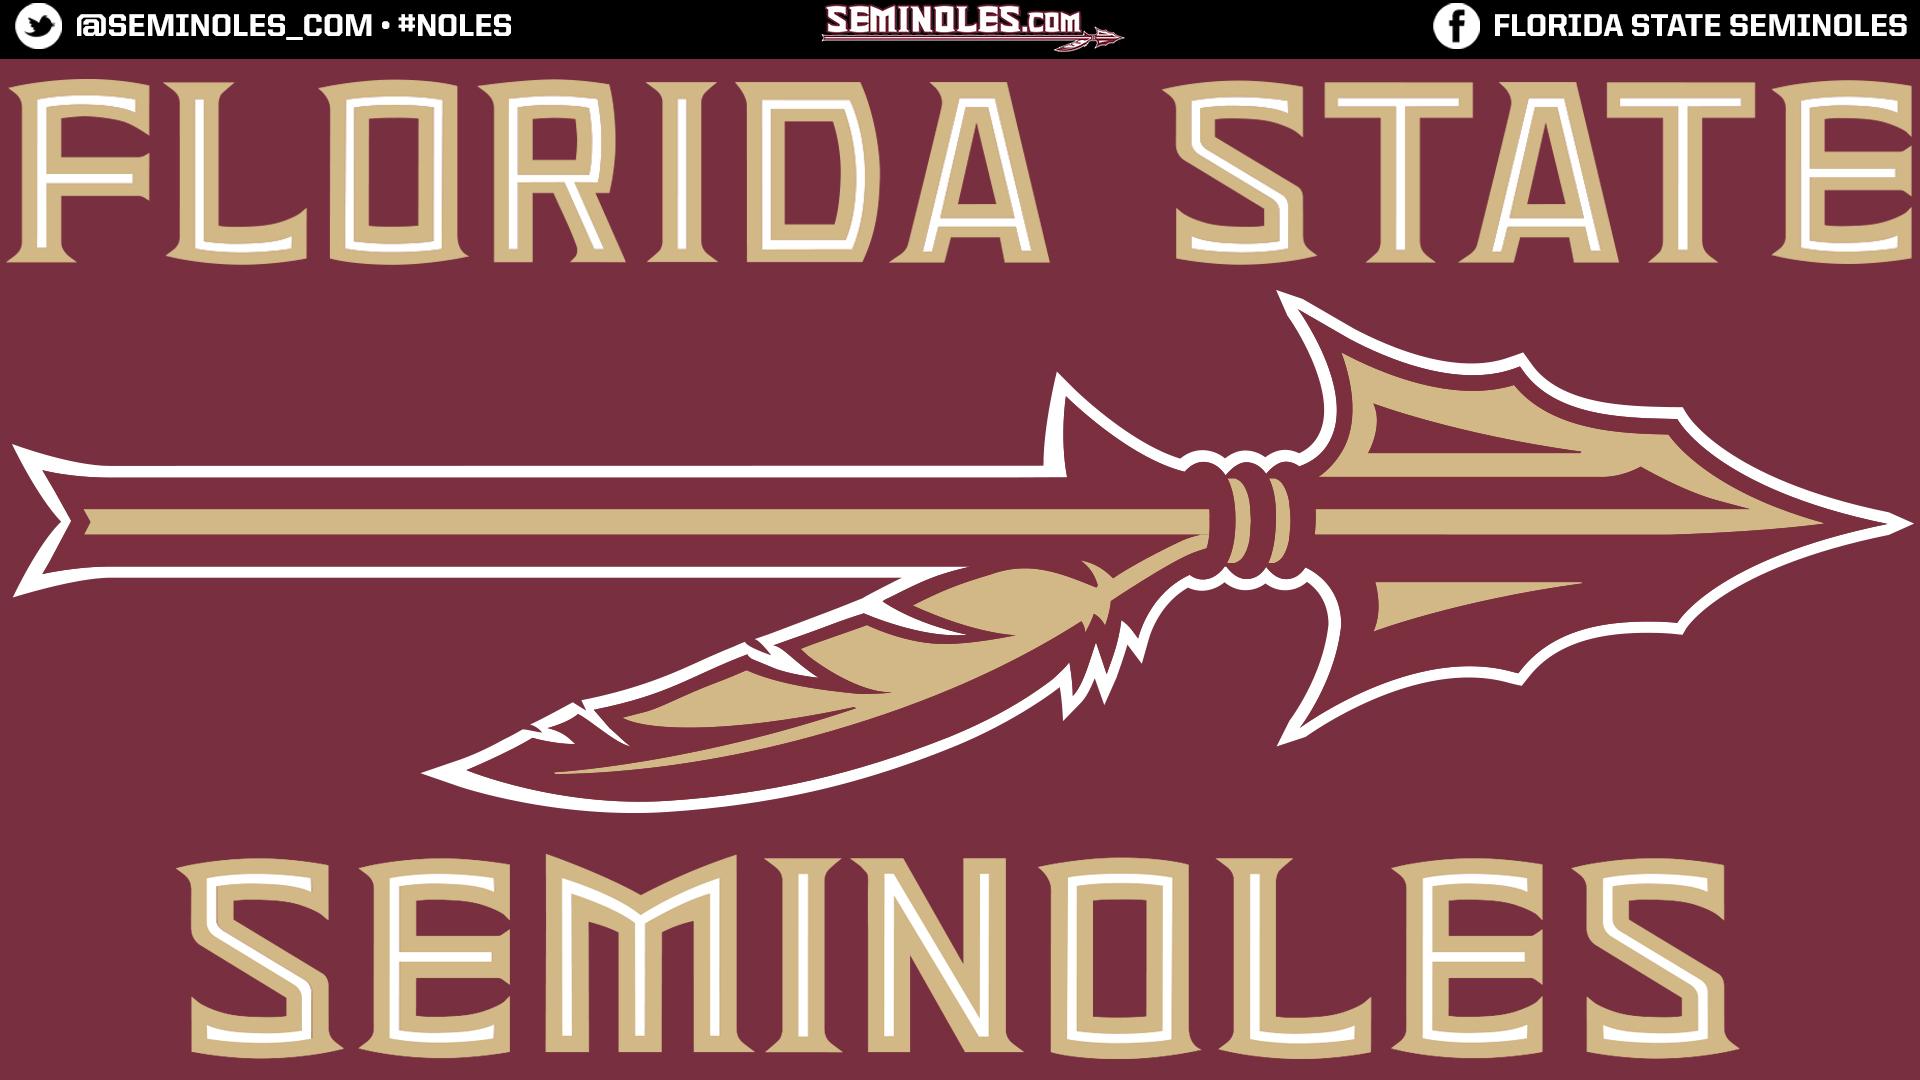 Florida State Seminoles. Official Athletic Site